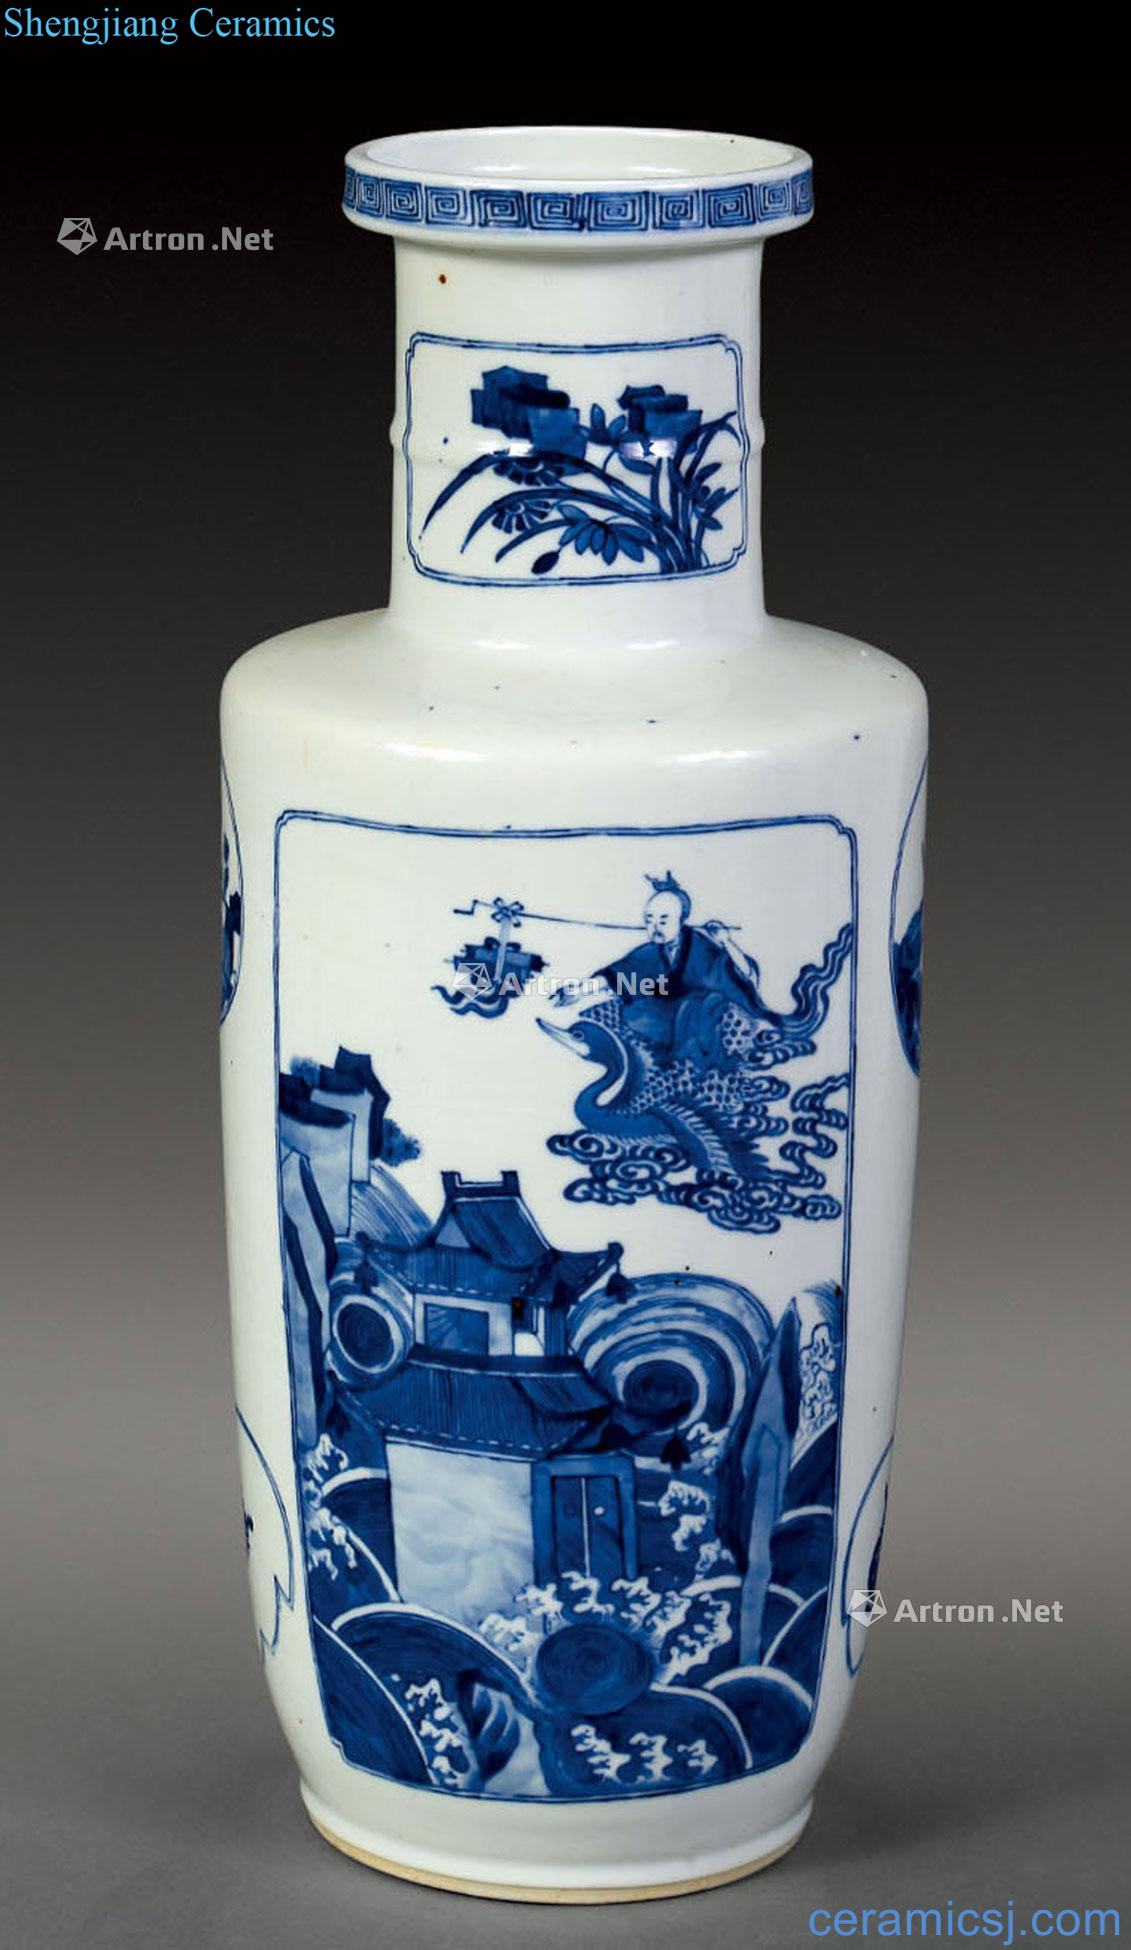 Qing porcelain medallion landscape characters were bottles